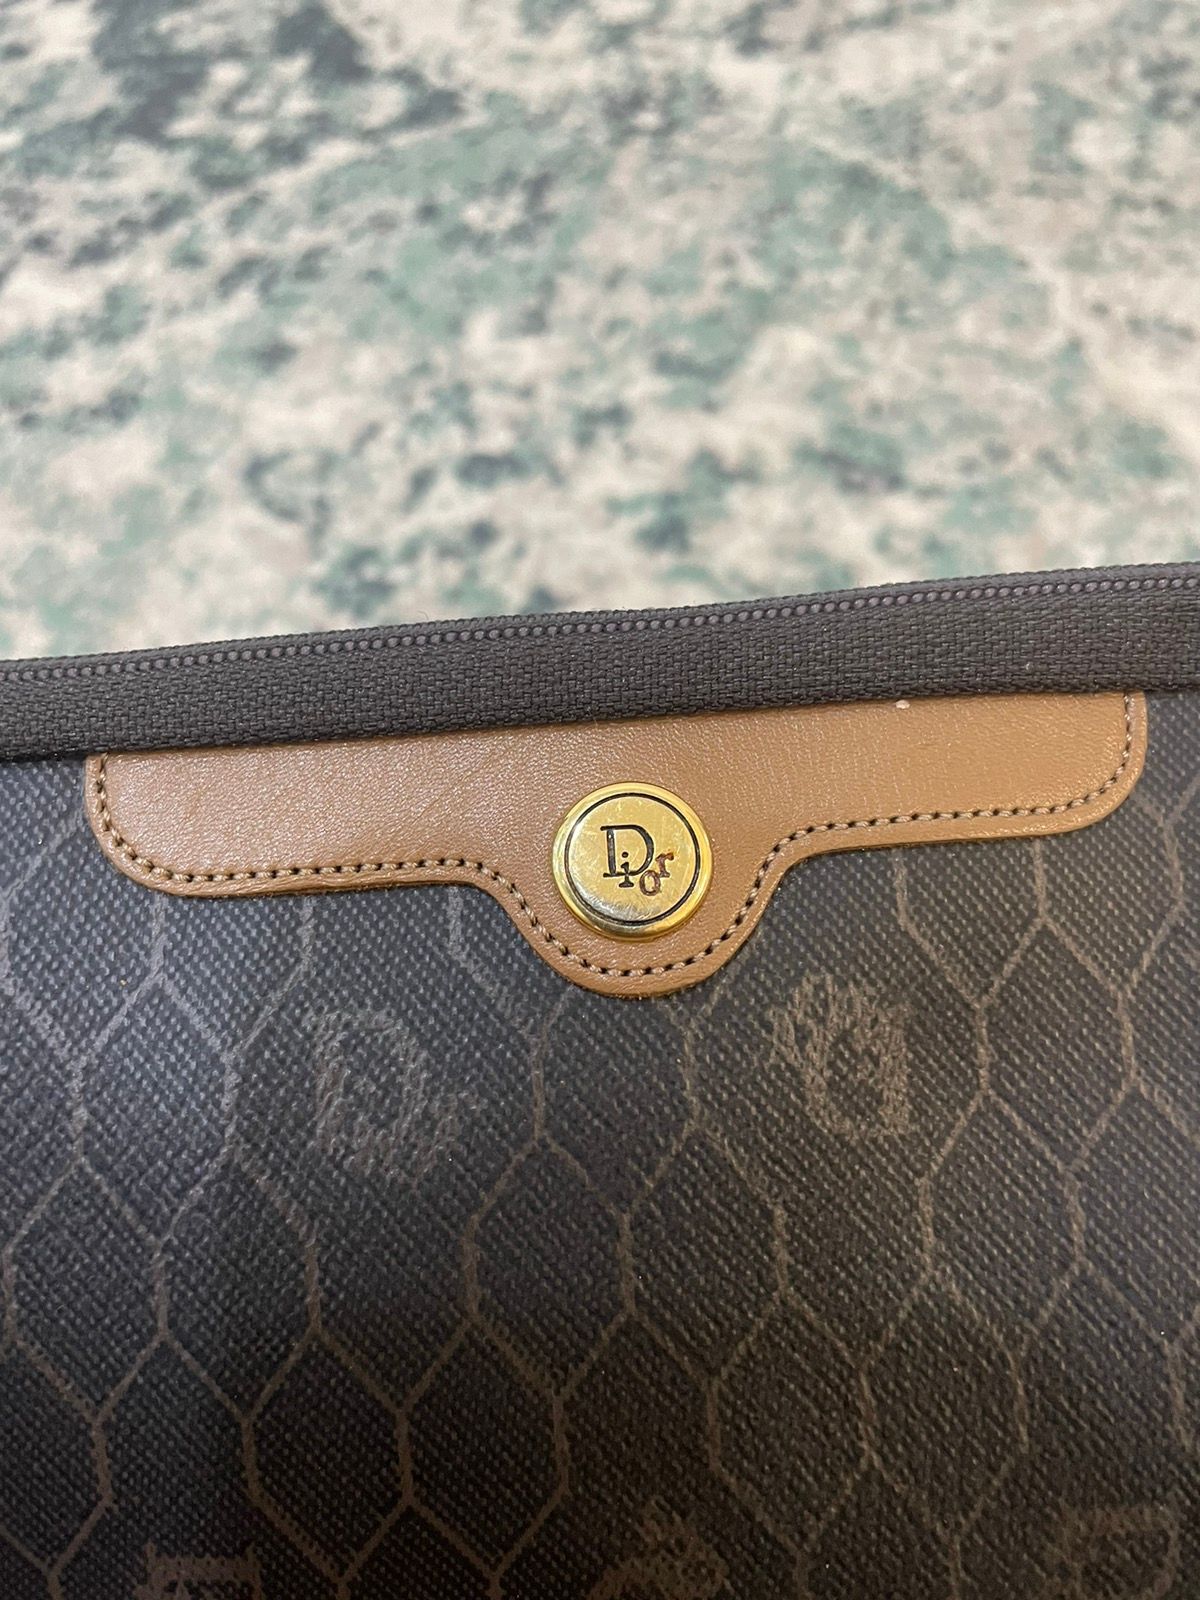 Dior Honey Comb Monogram Leather Clutch Bag - 10